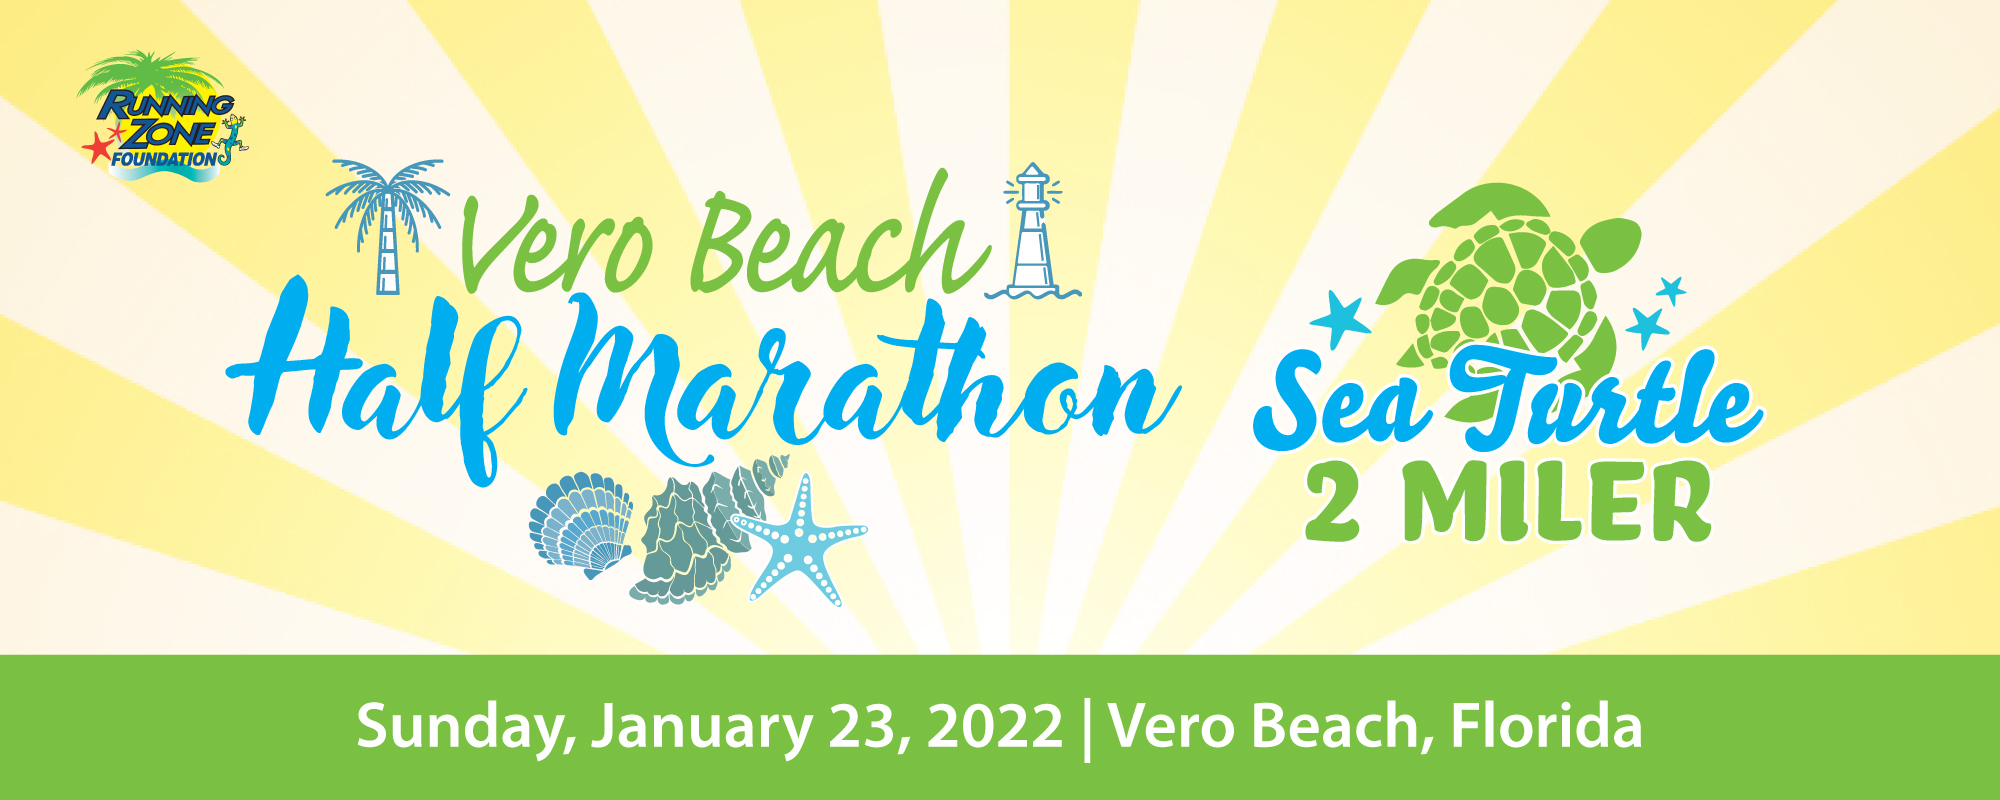 1/23/2022, Vero Beach Half Marathon & Sea Turtle 2 Miler Results, Vero